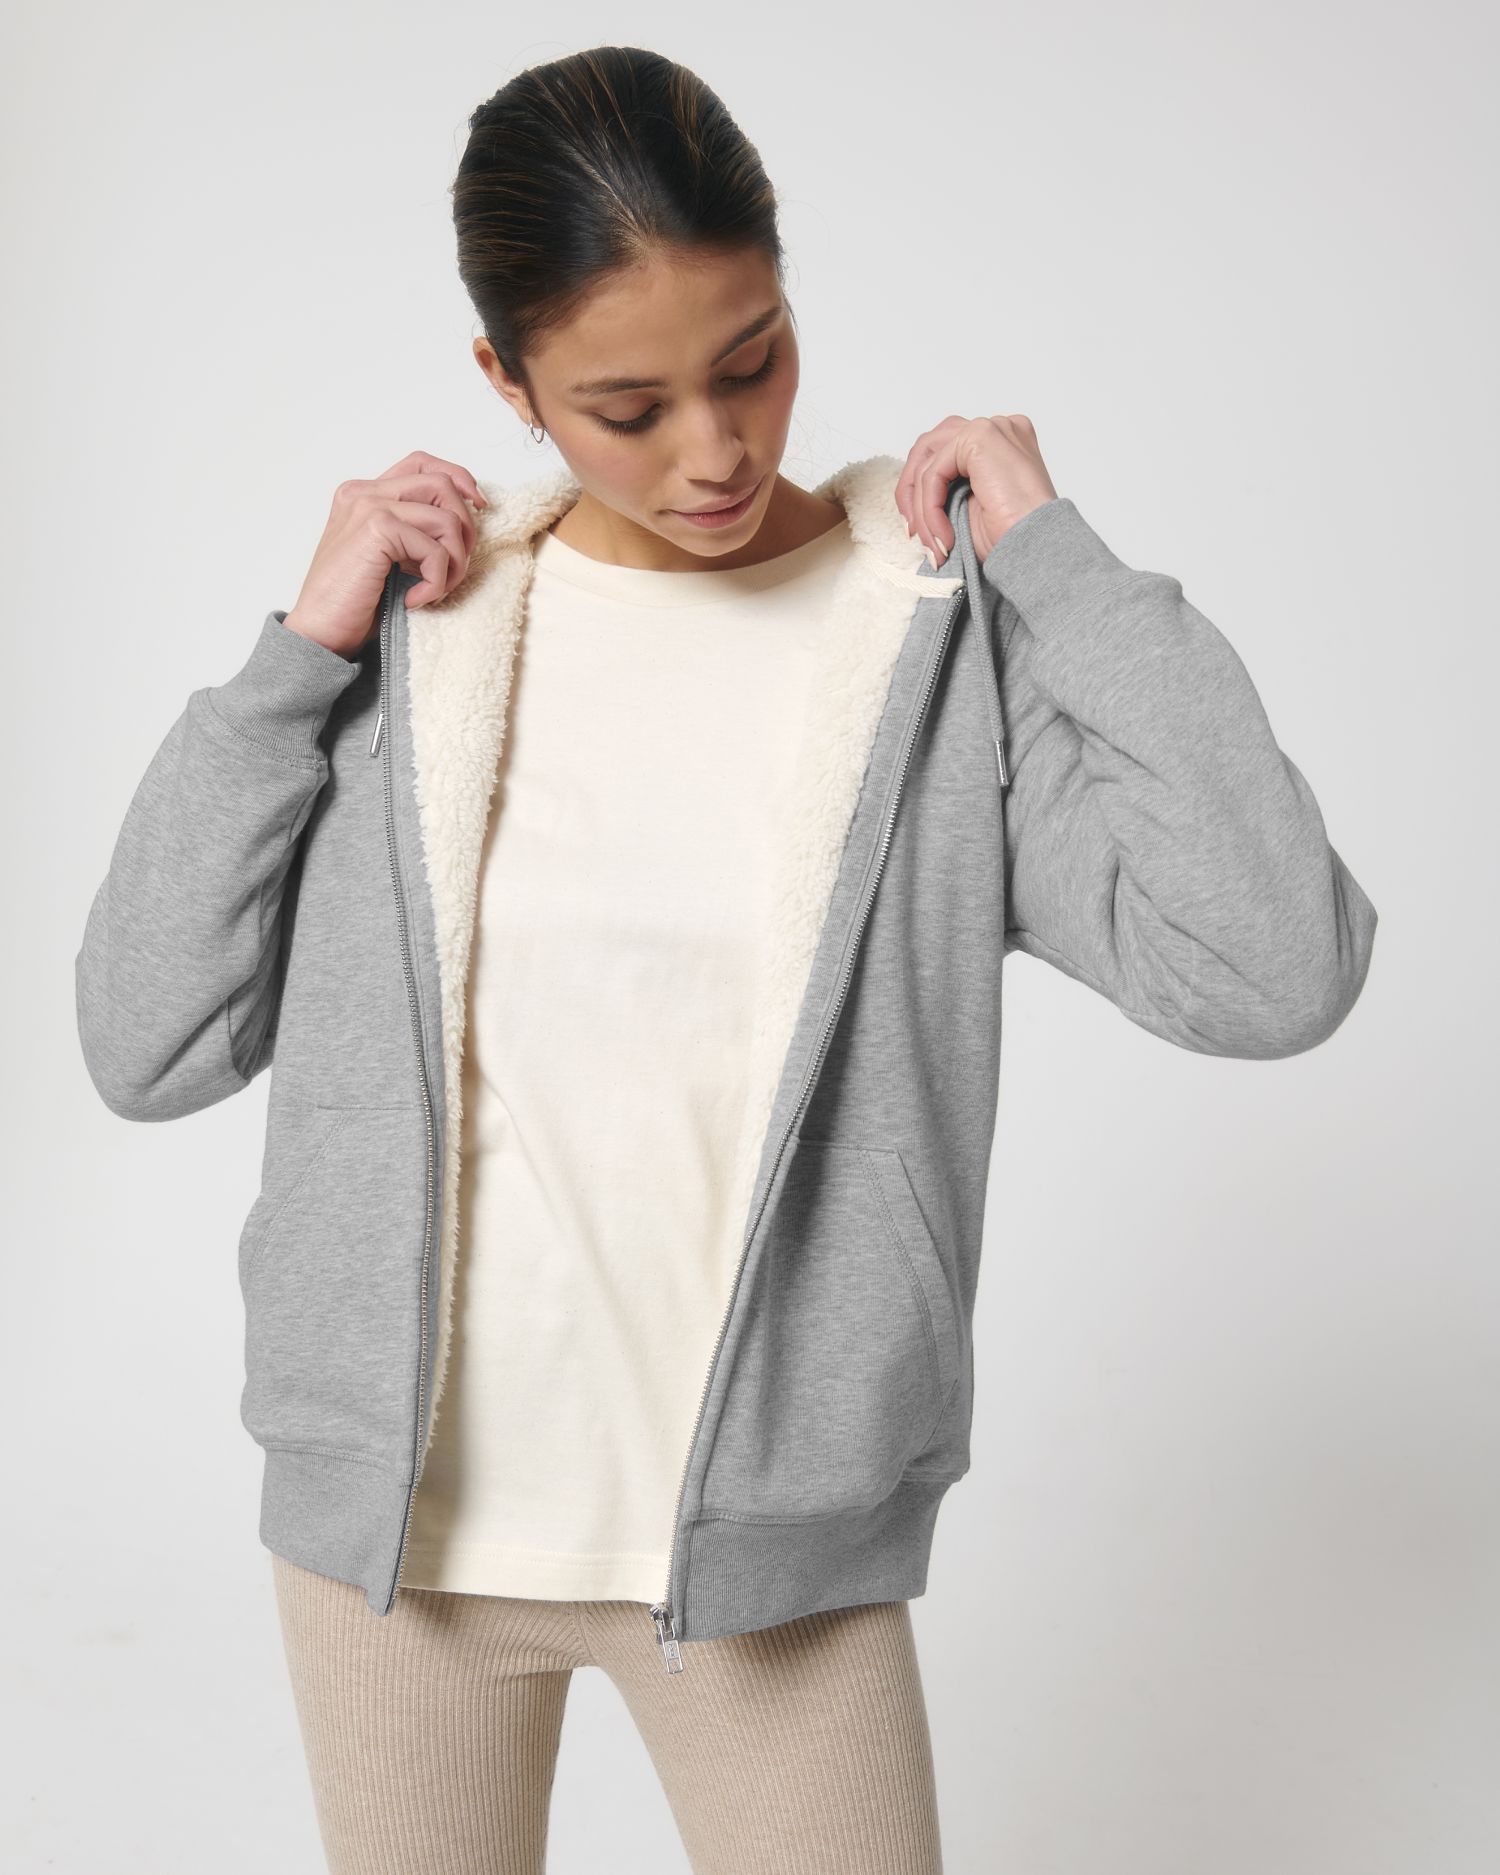 Zip-thru sweatshirts Hygger Sherpa in Farbe Heather Grey